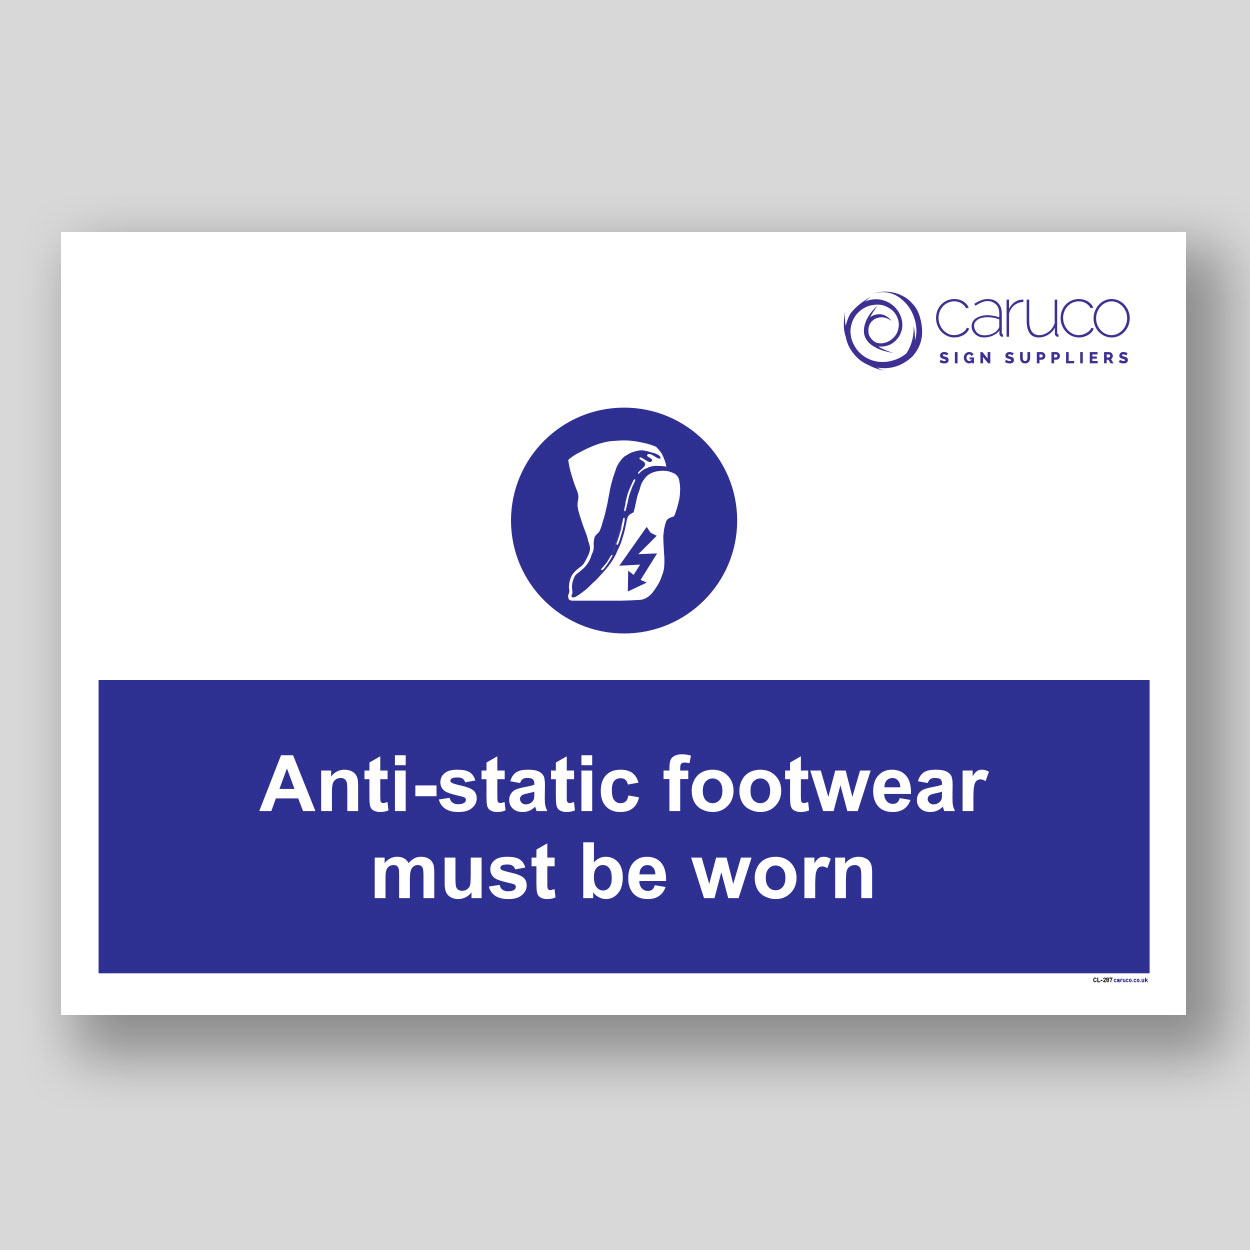 CL-287 Anti-static footwear